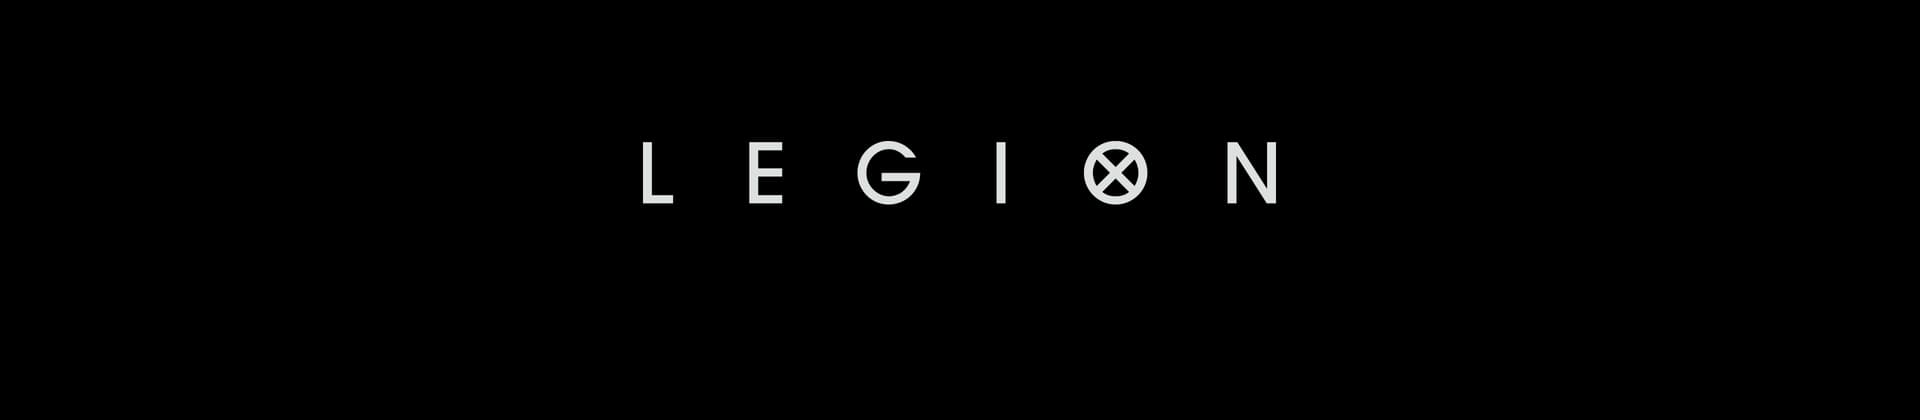 Legion TV Show Logo On Black